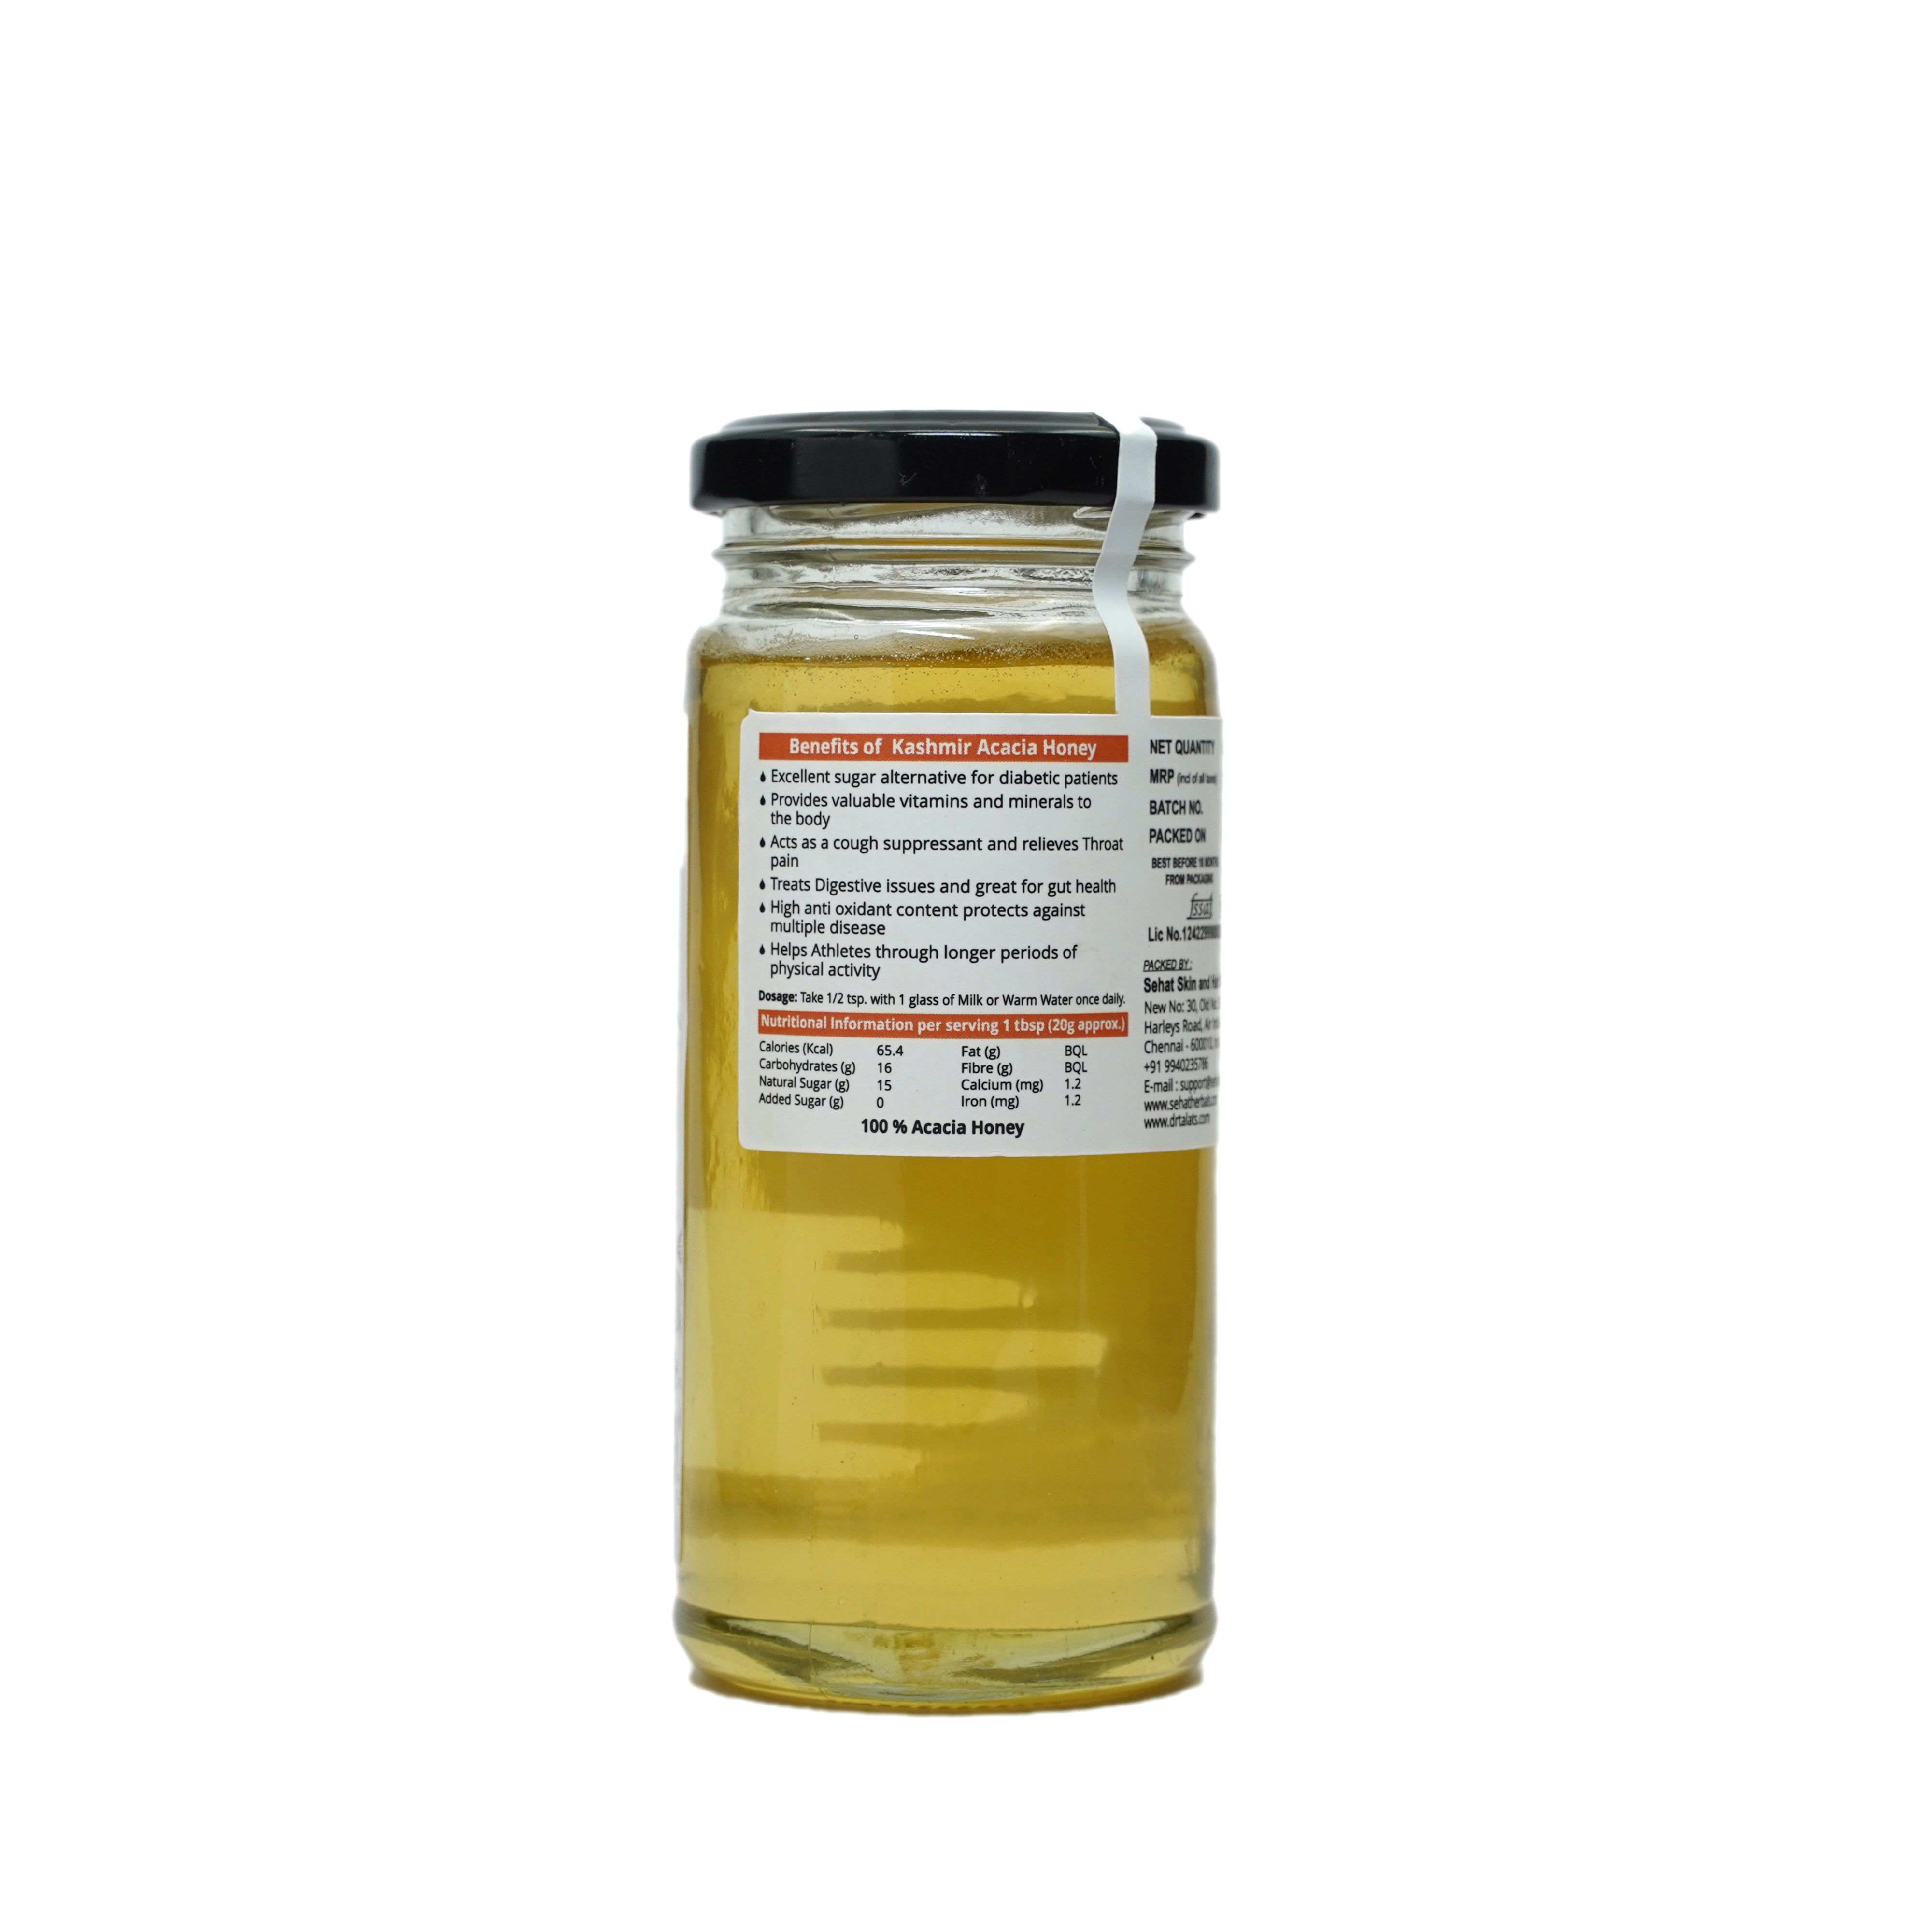 Premium Kashmir Acacia Honey